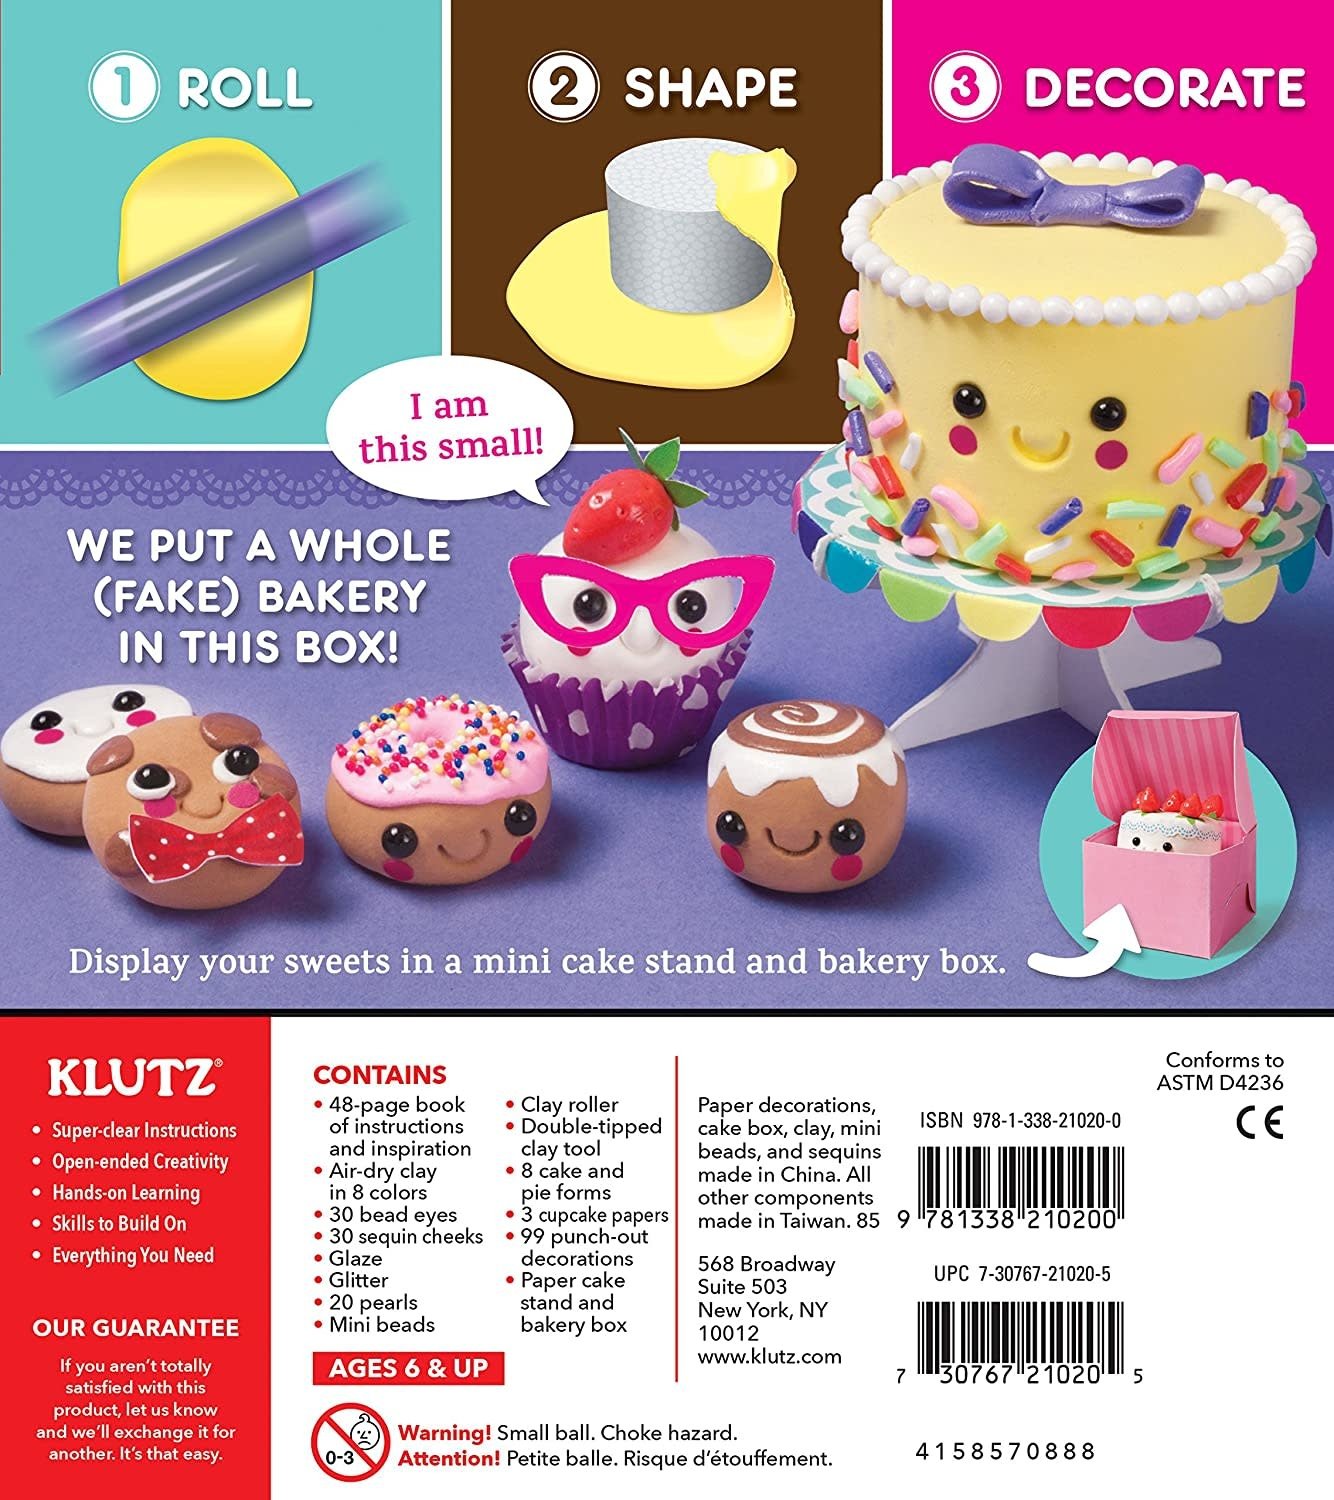 Mini Bake Shop by Klutz - FUNdamentally Toys